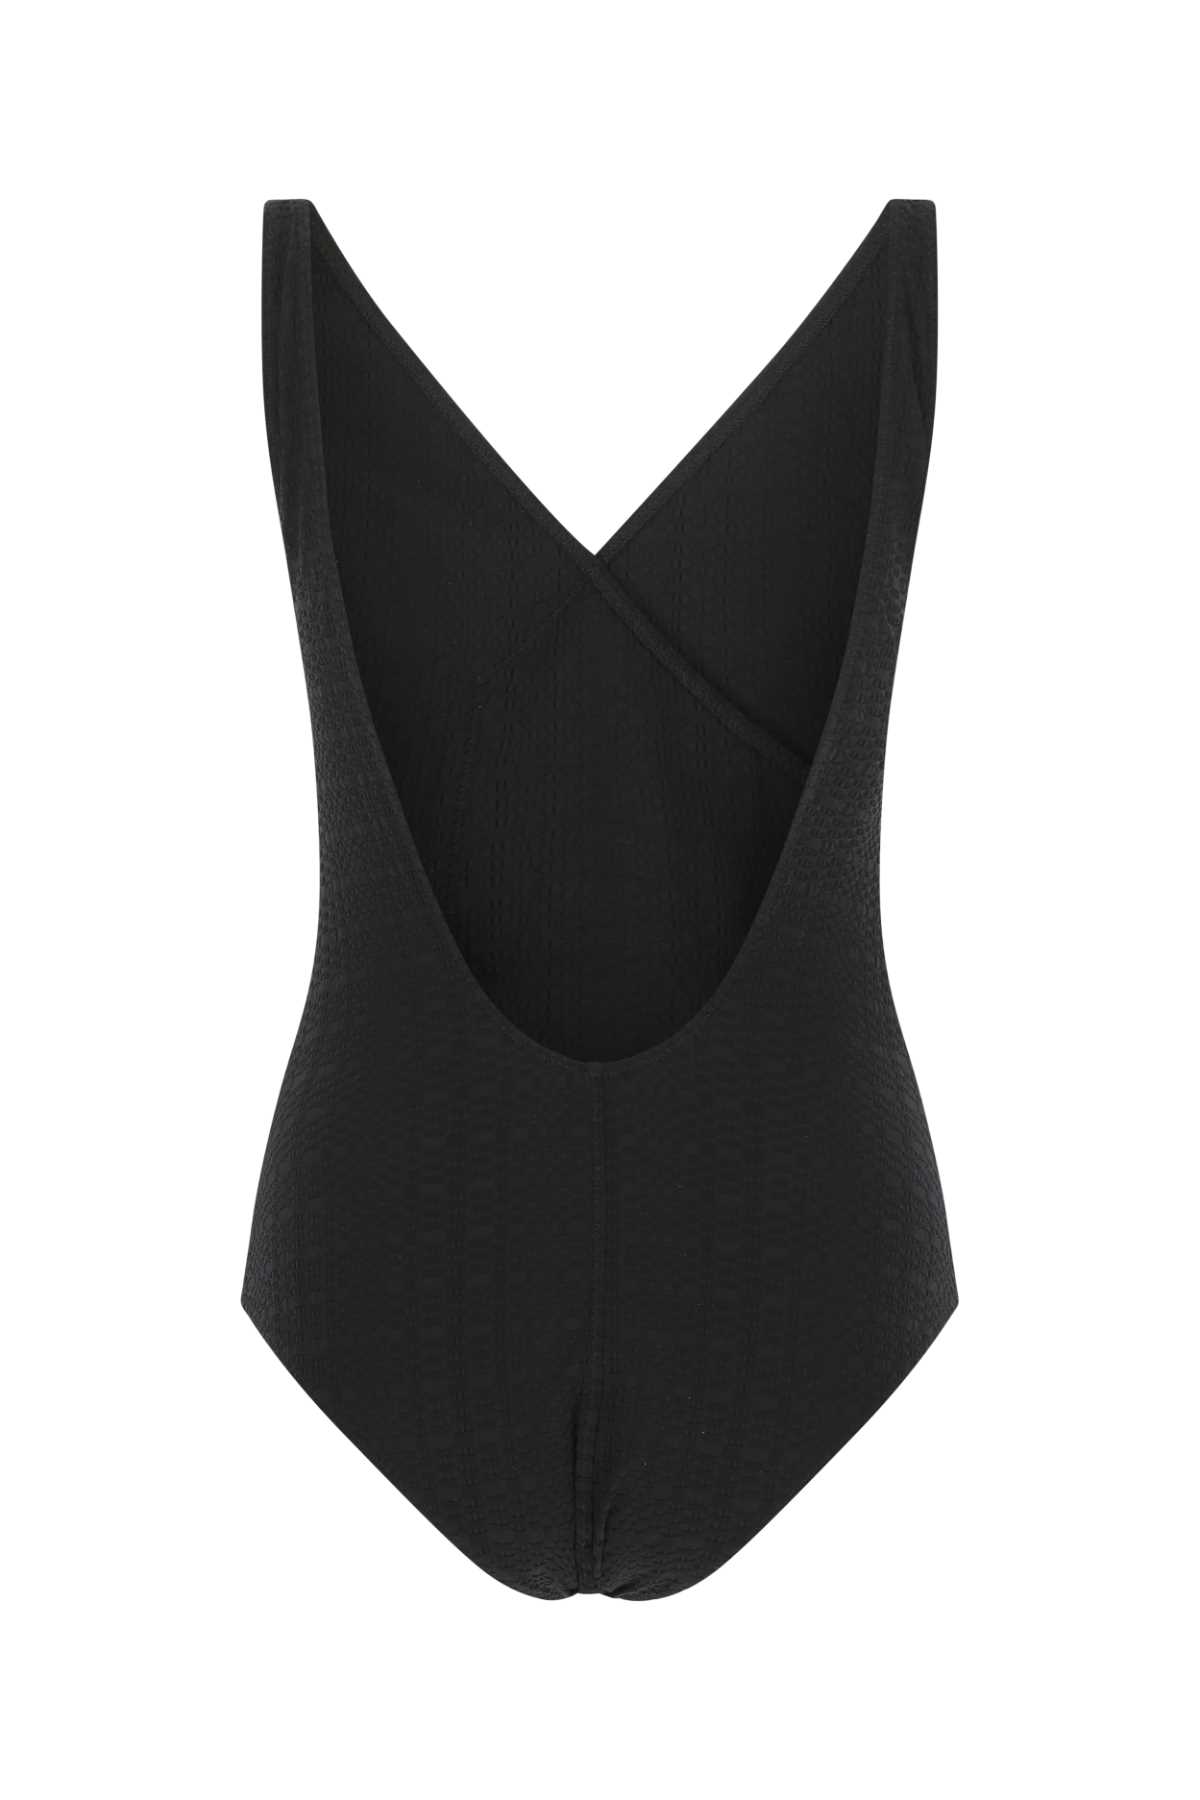 Shop Lisa Marie Fernandez Black Stretch Seersucker Scallop Swimsuit